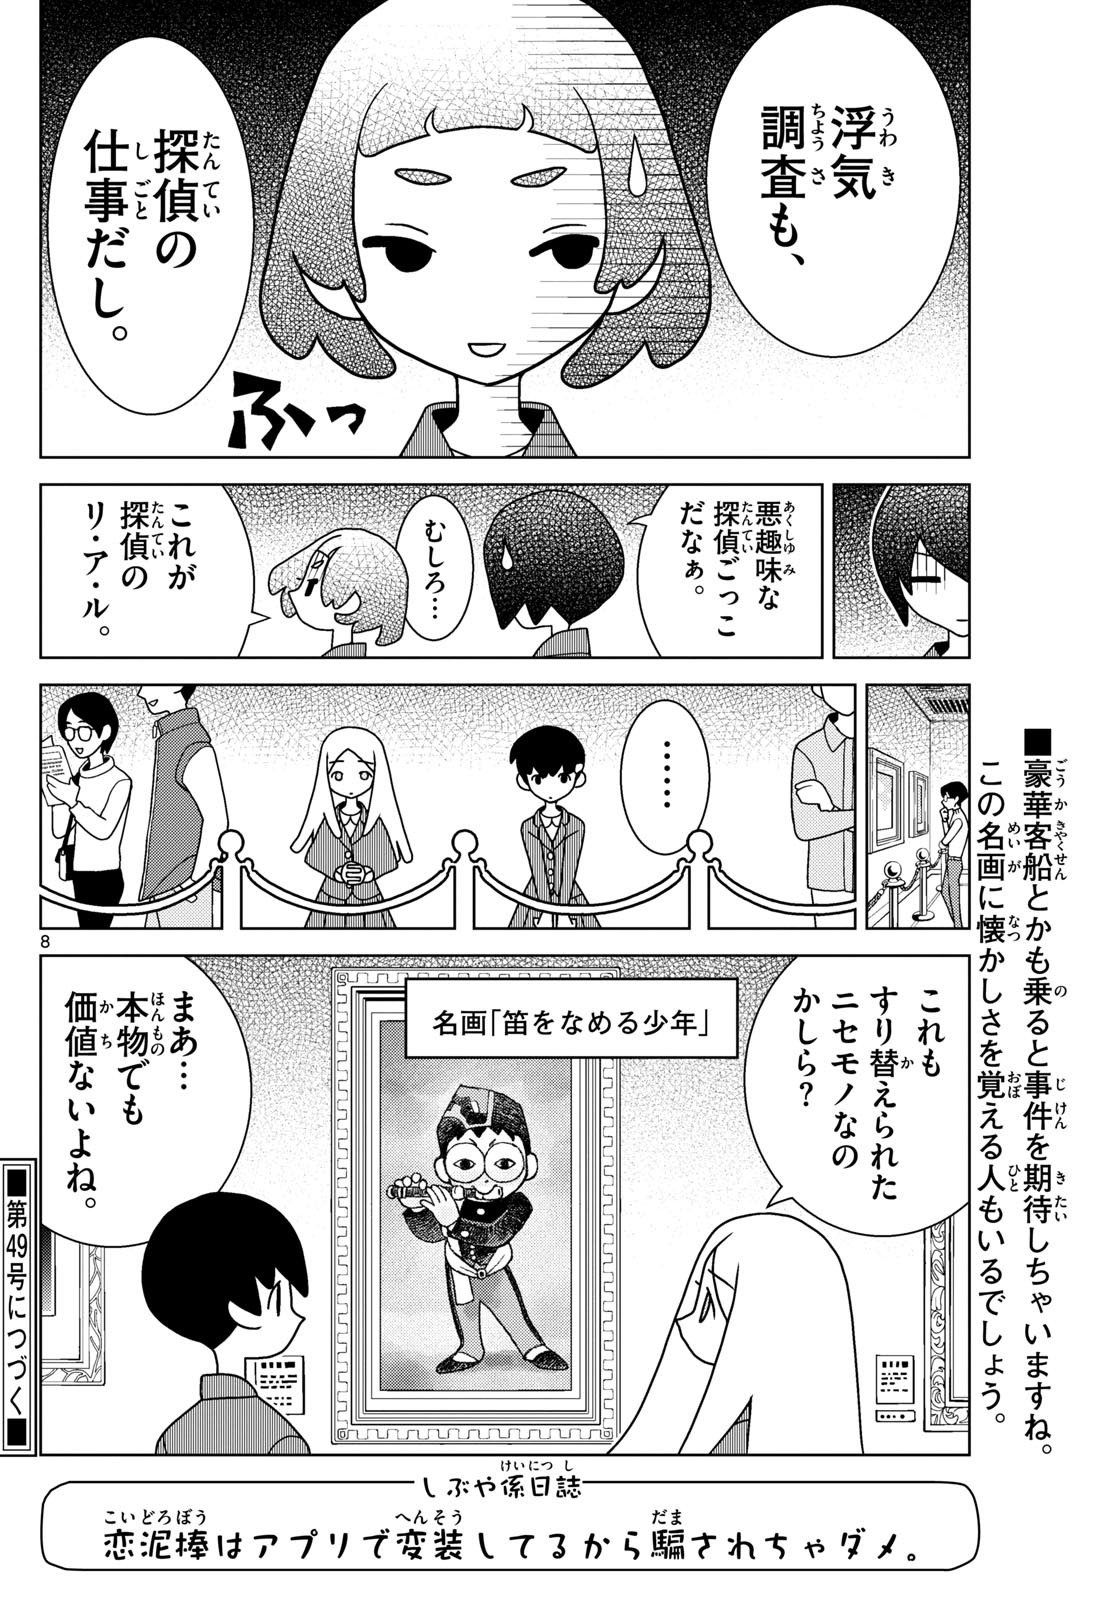 Shibuya Near Family - Chapter 076 - Page 8